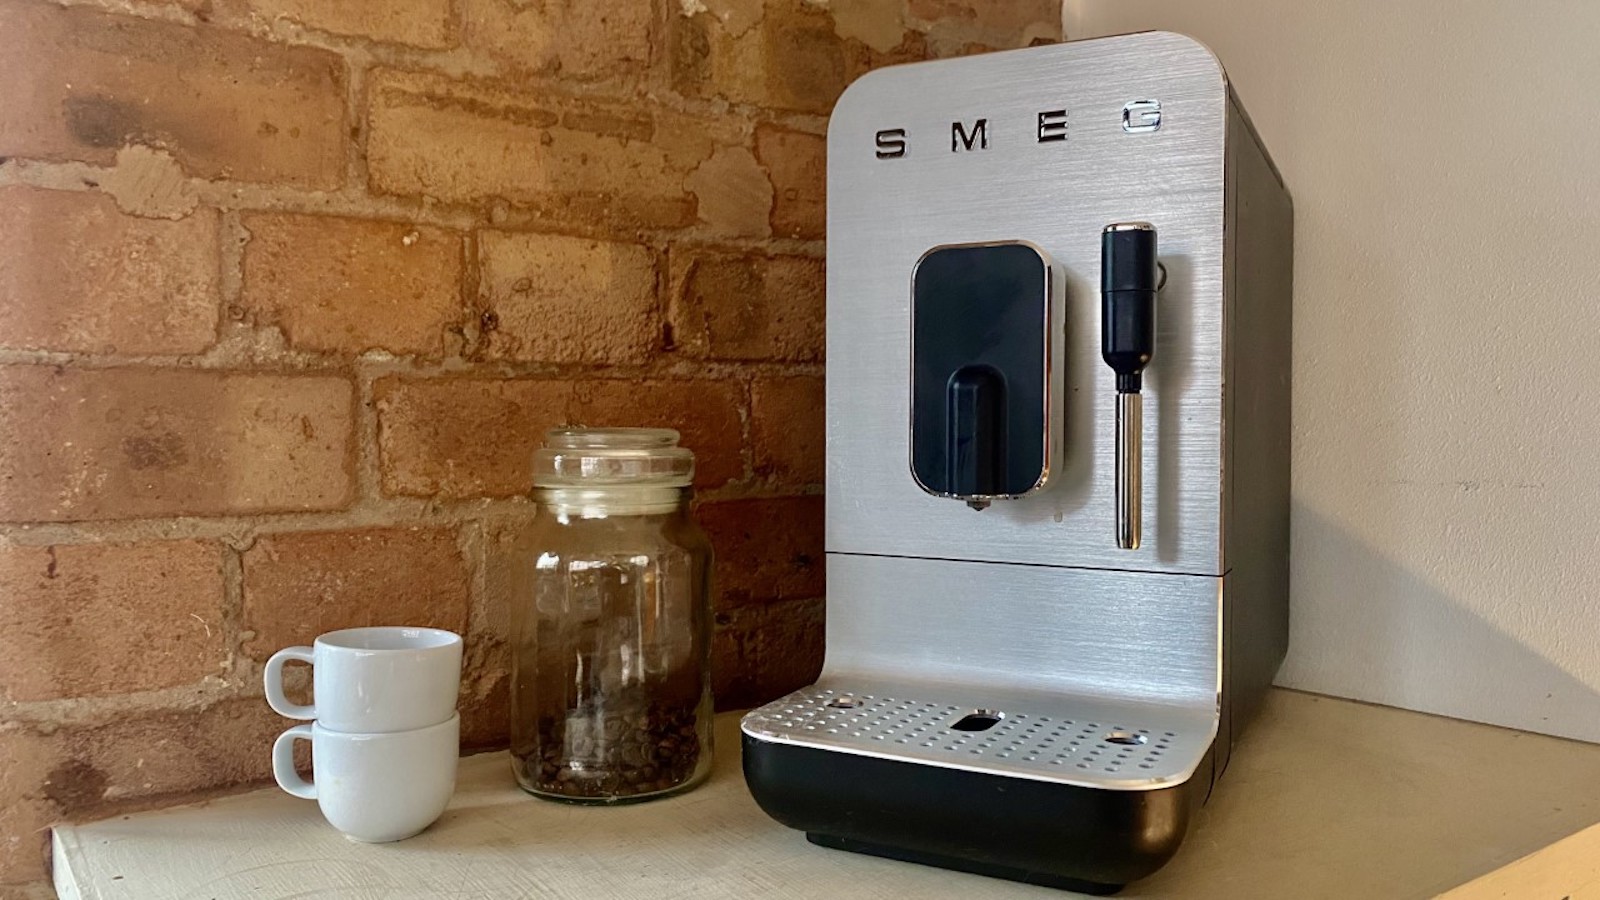   Cafetera Smeg: la mejor máquina del grano a la taza